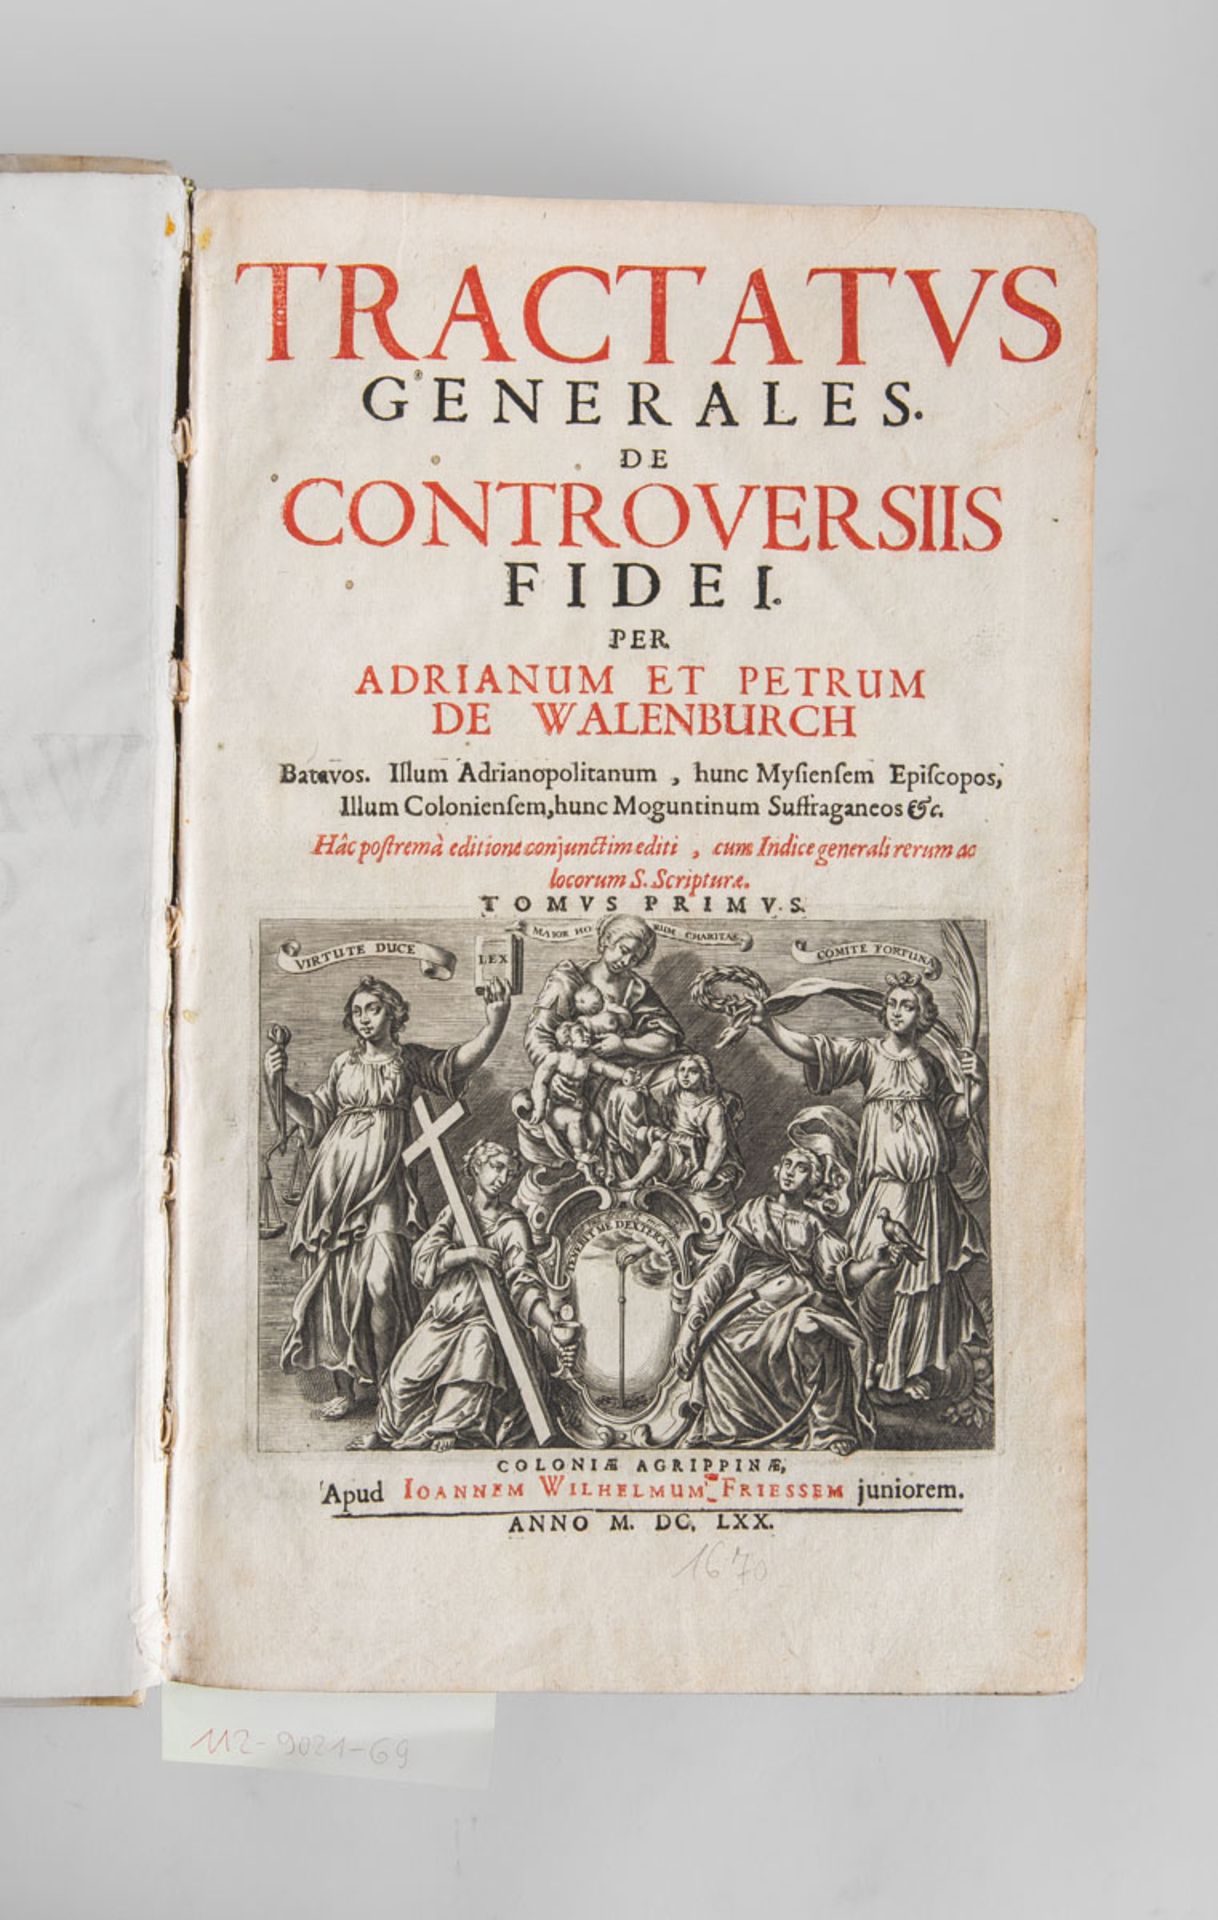 Tractatus generales de controversiis fidei, Adriaan van Watenburch J.W. Friessem 1670